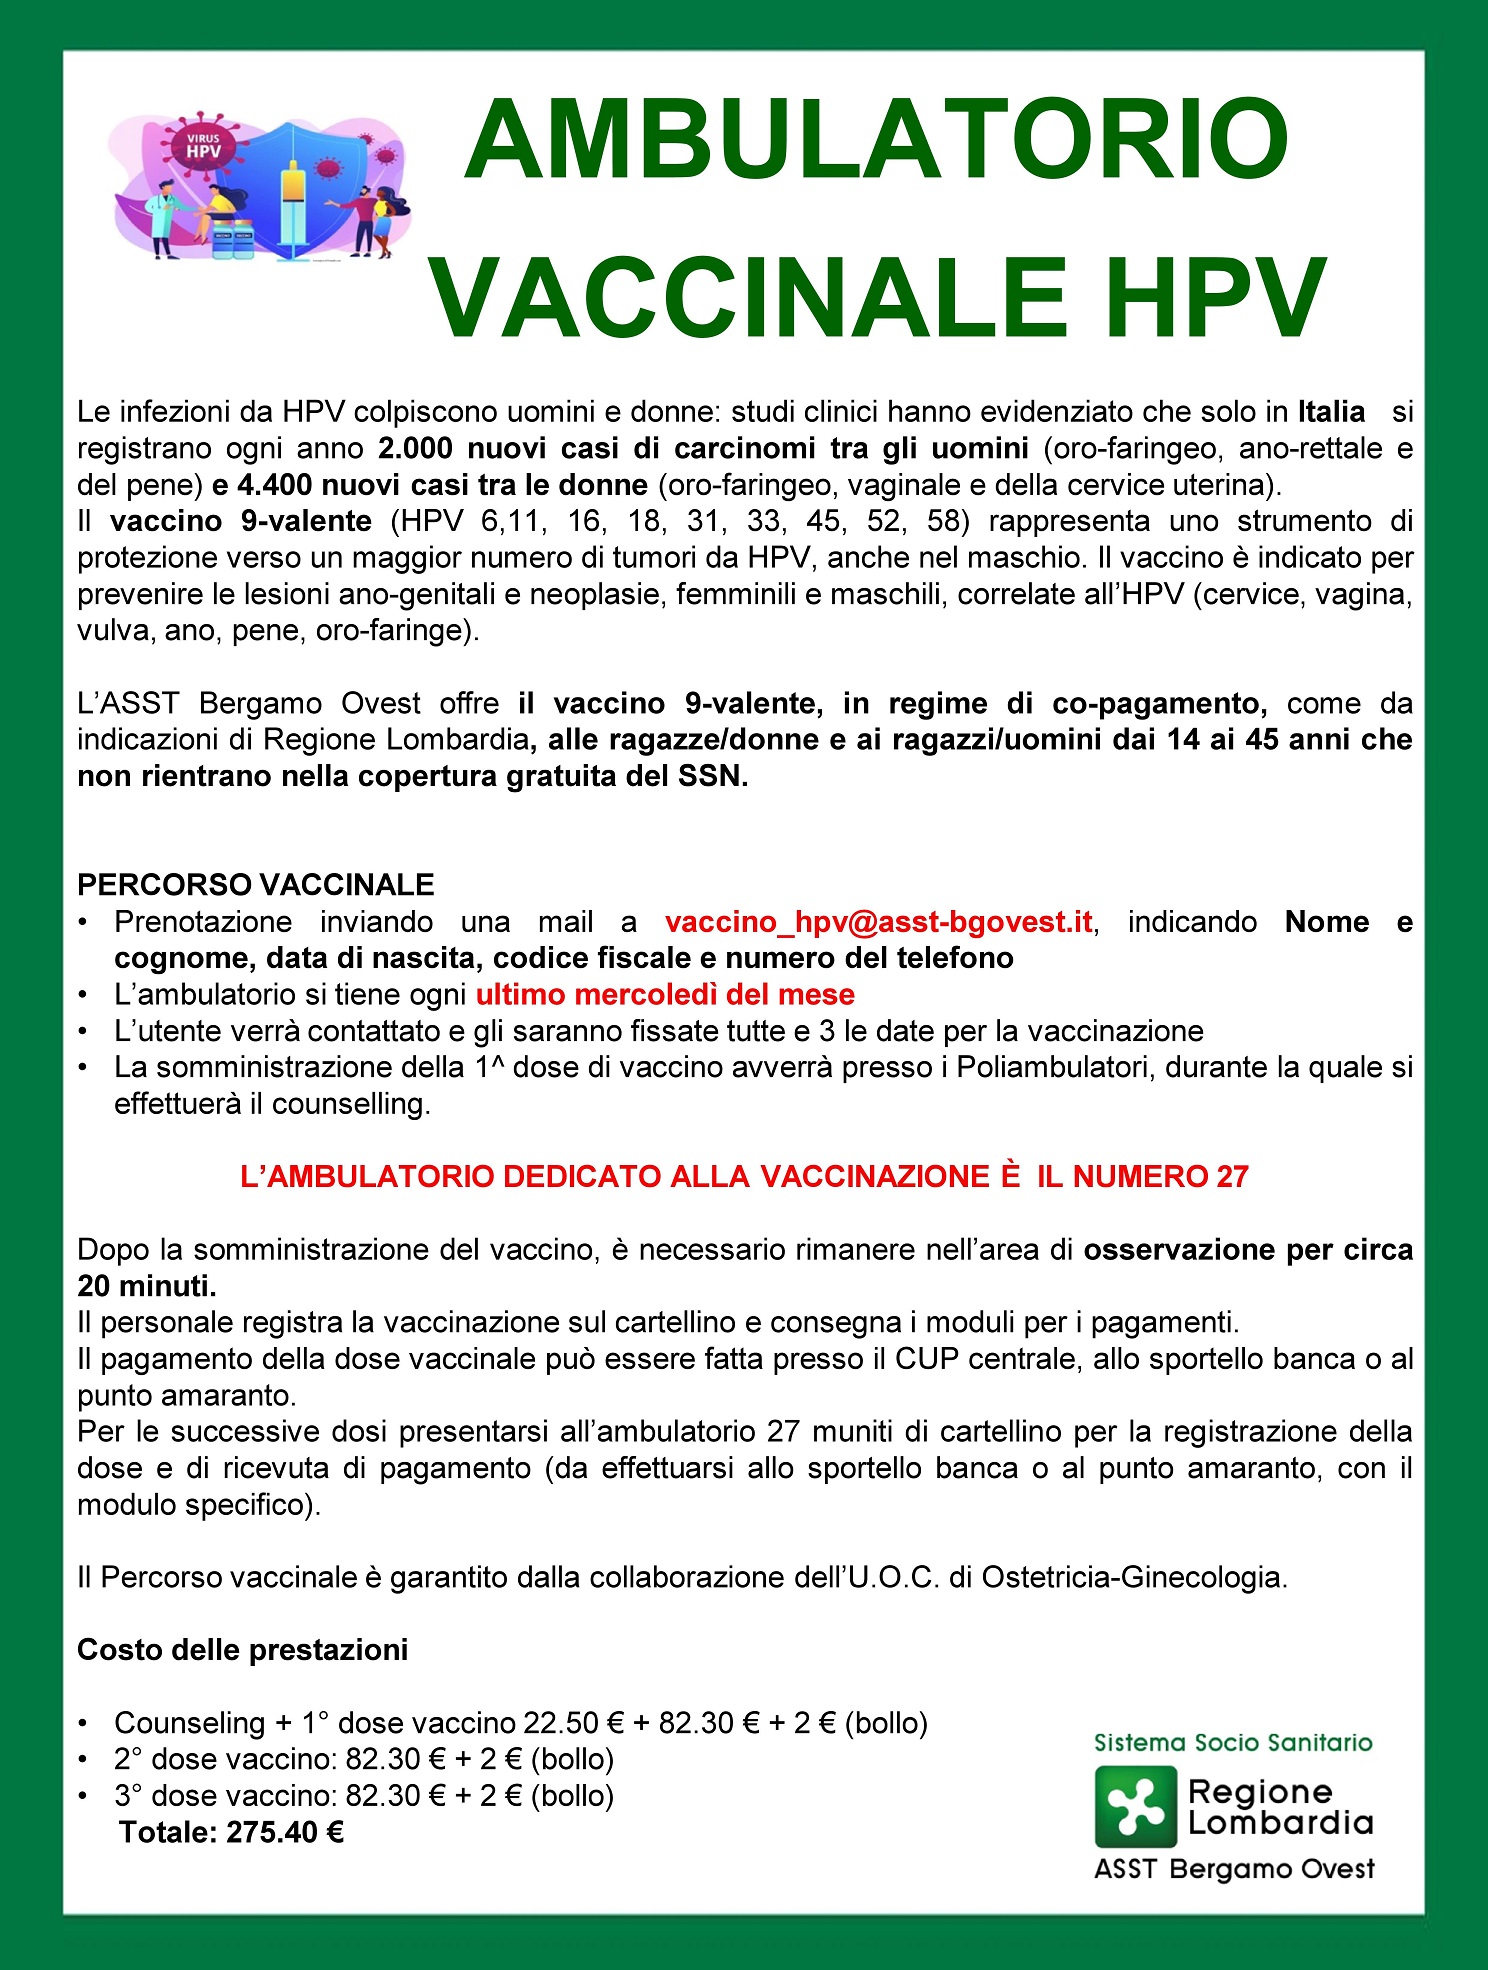 hpv and gardasil vaccine